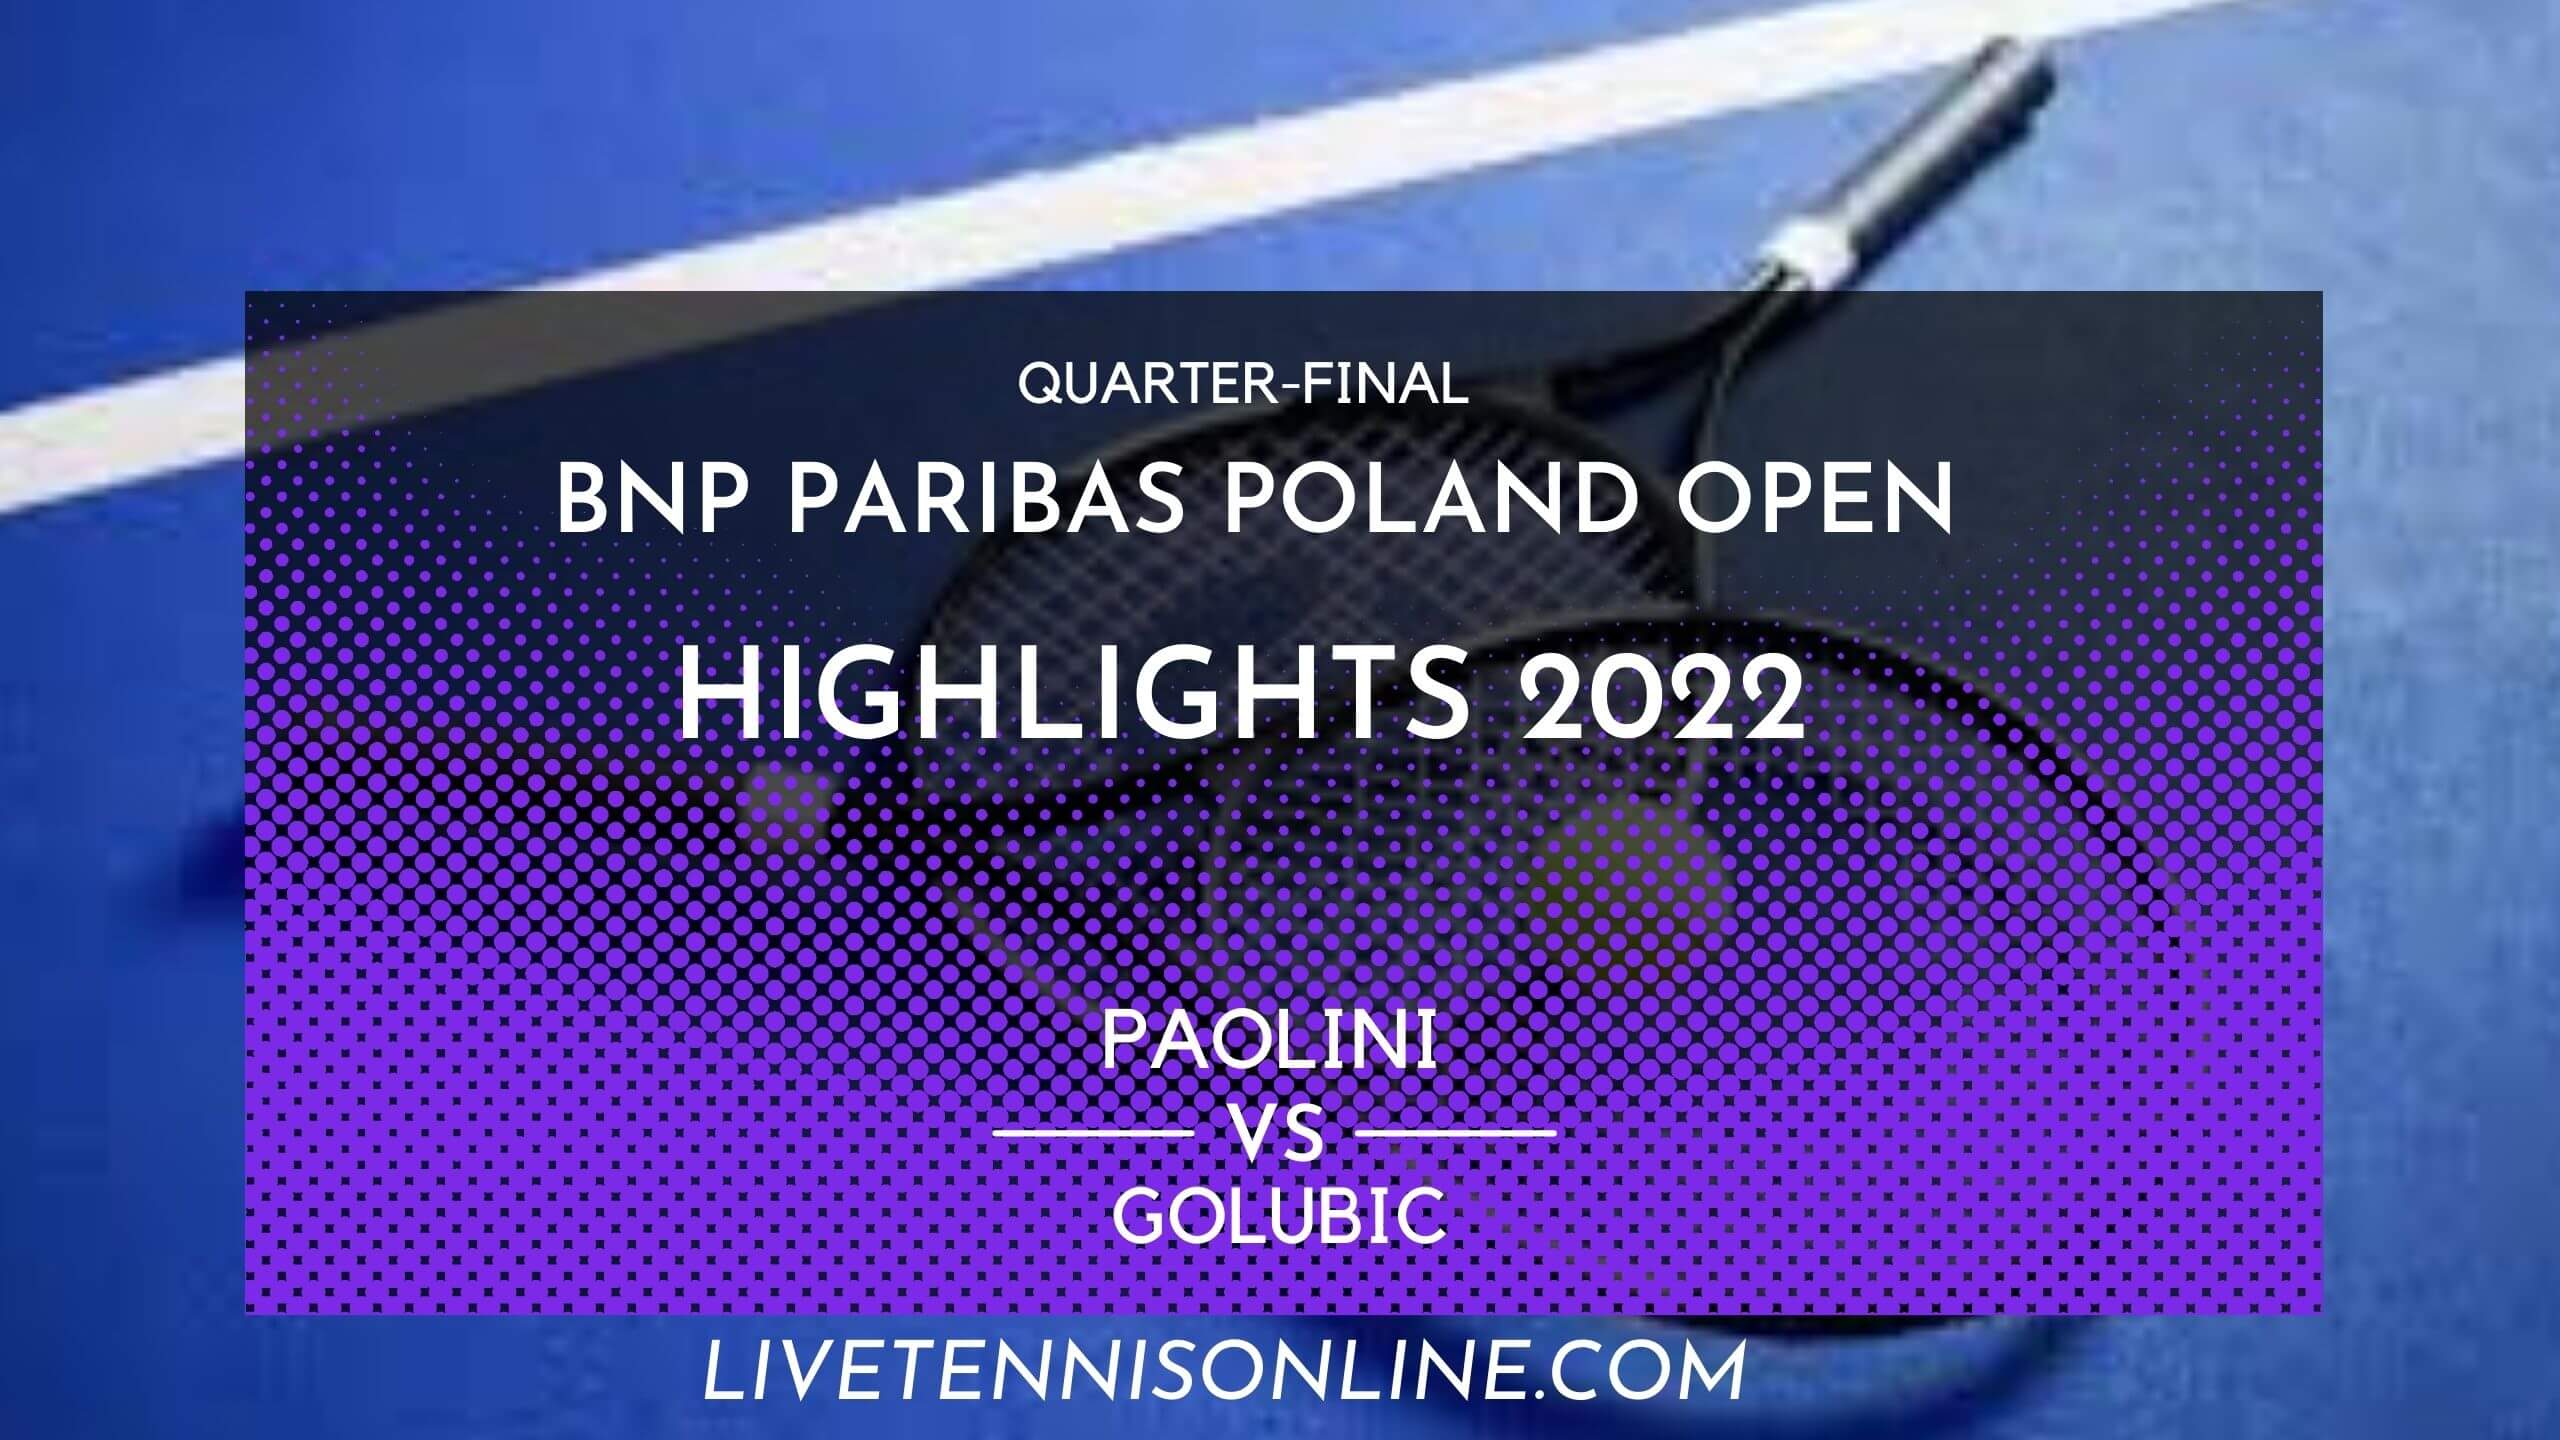 Paolini Vs Golubic QF Highlights 2022 Poland Open